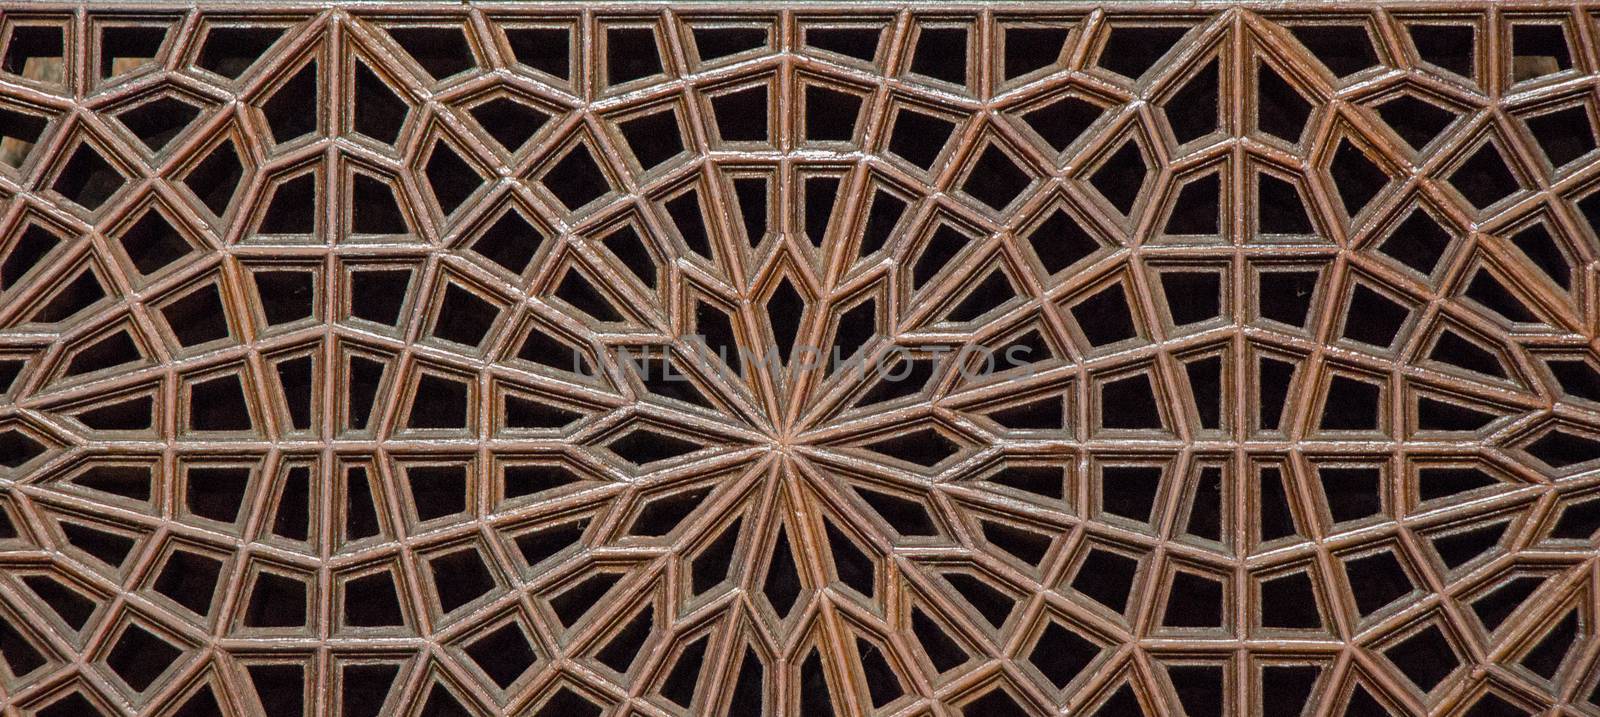 Ottoman  art with geometric patterns on wood by berkay